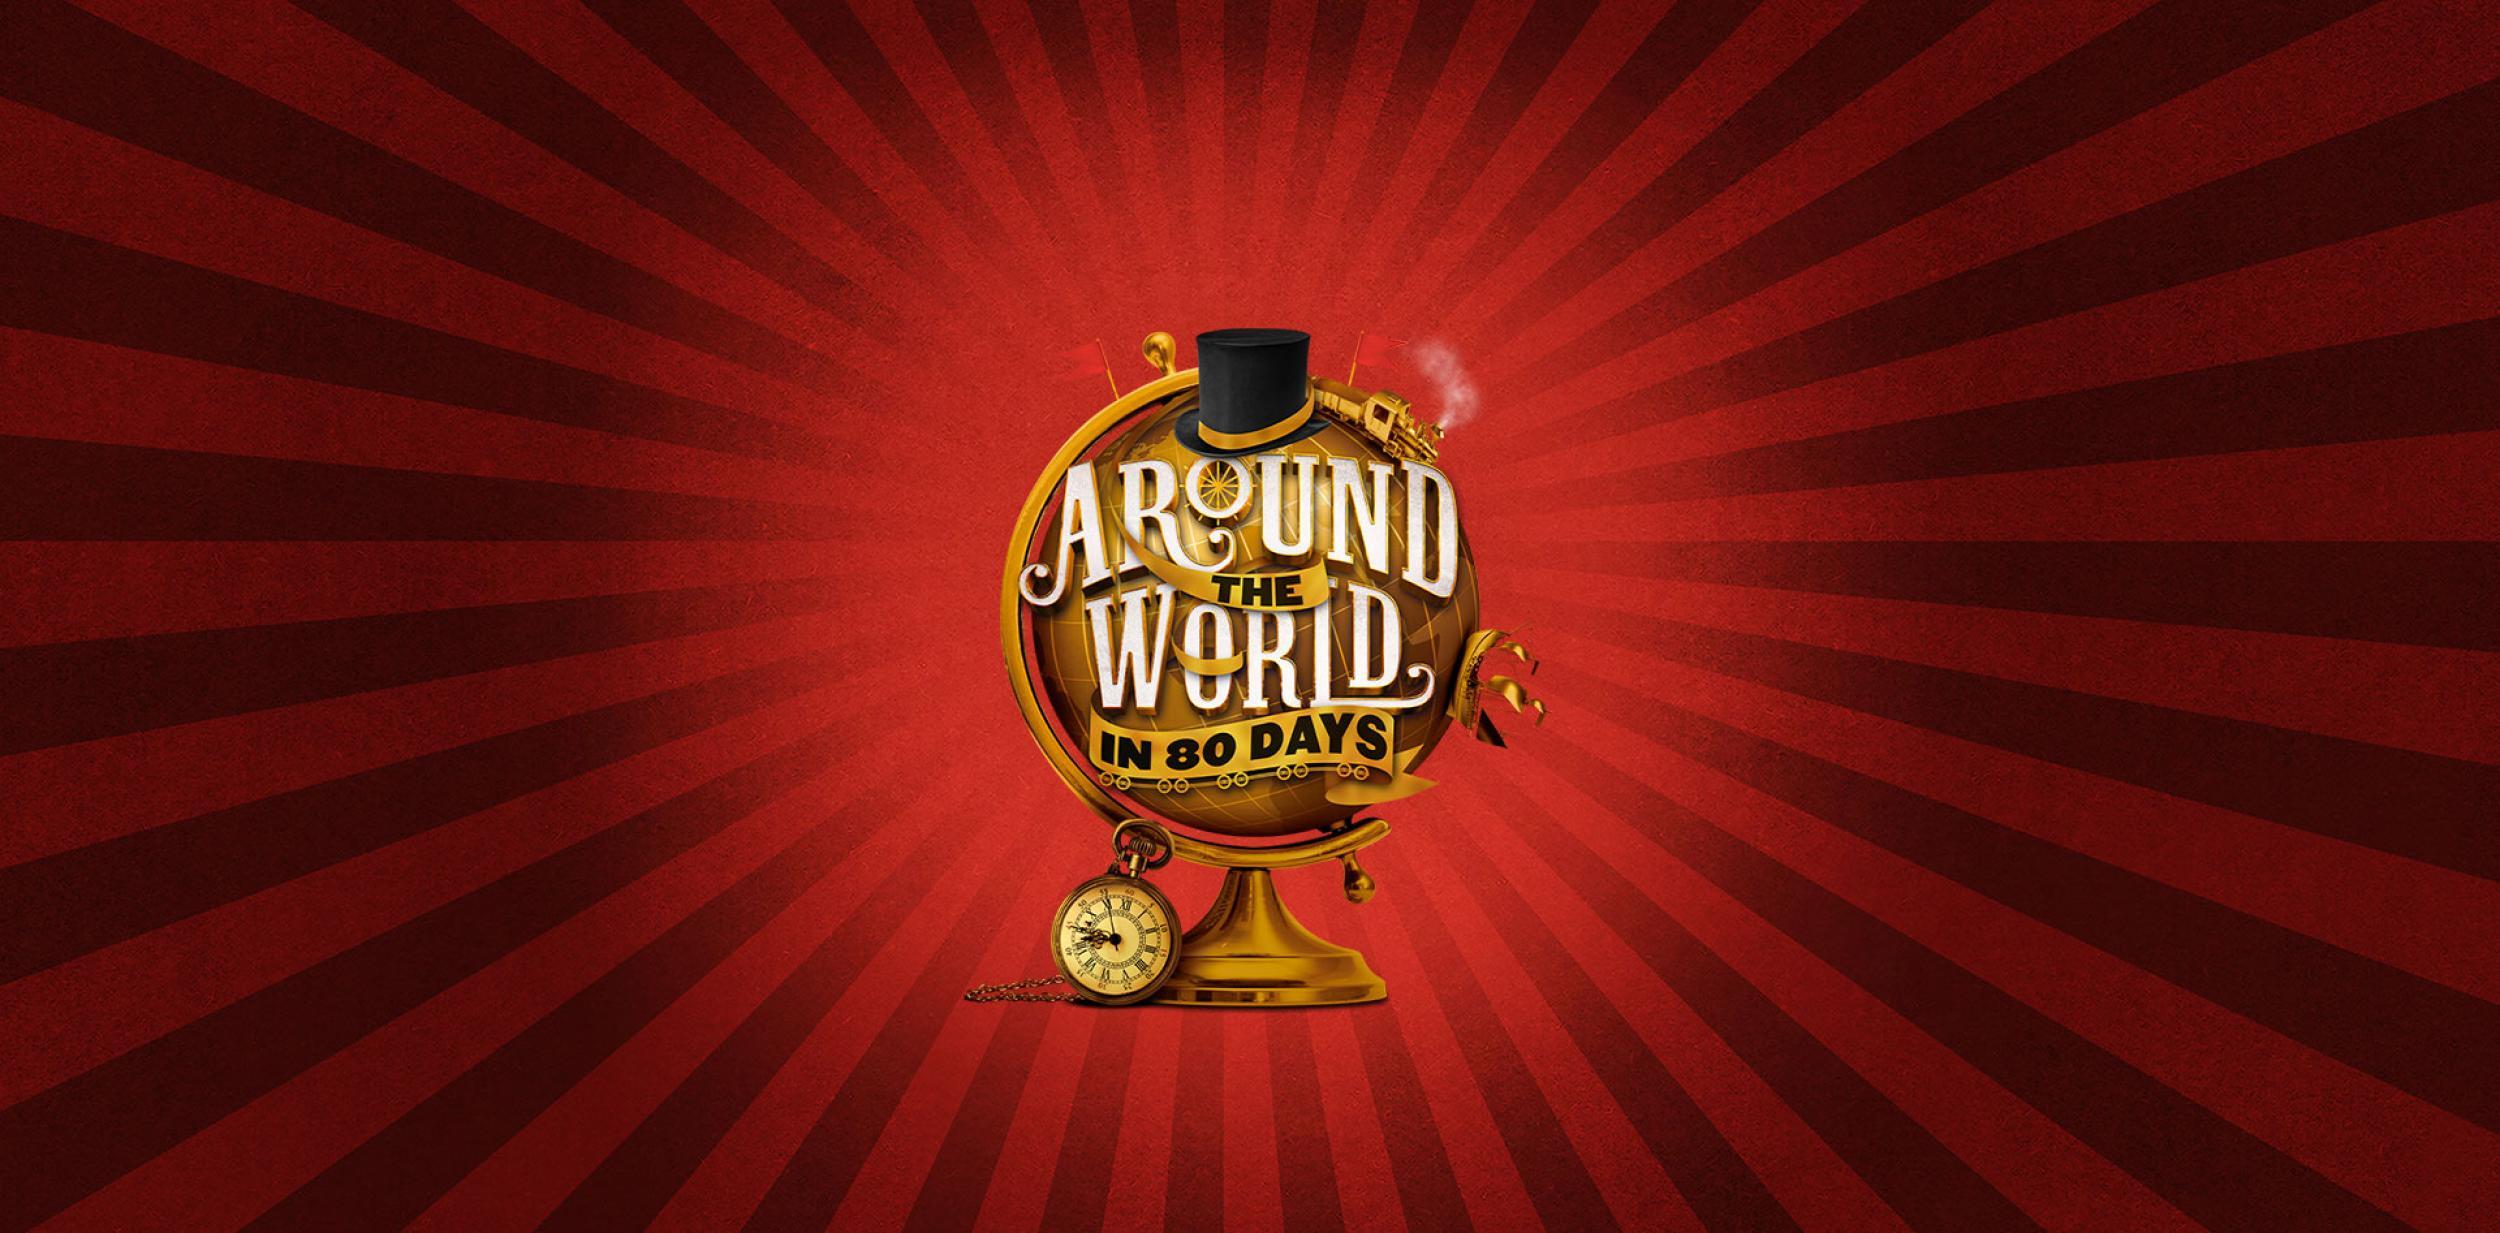 Around the World in 80 days logo on a golden globe graphic